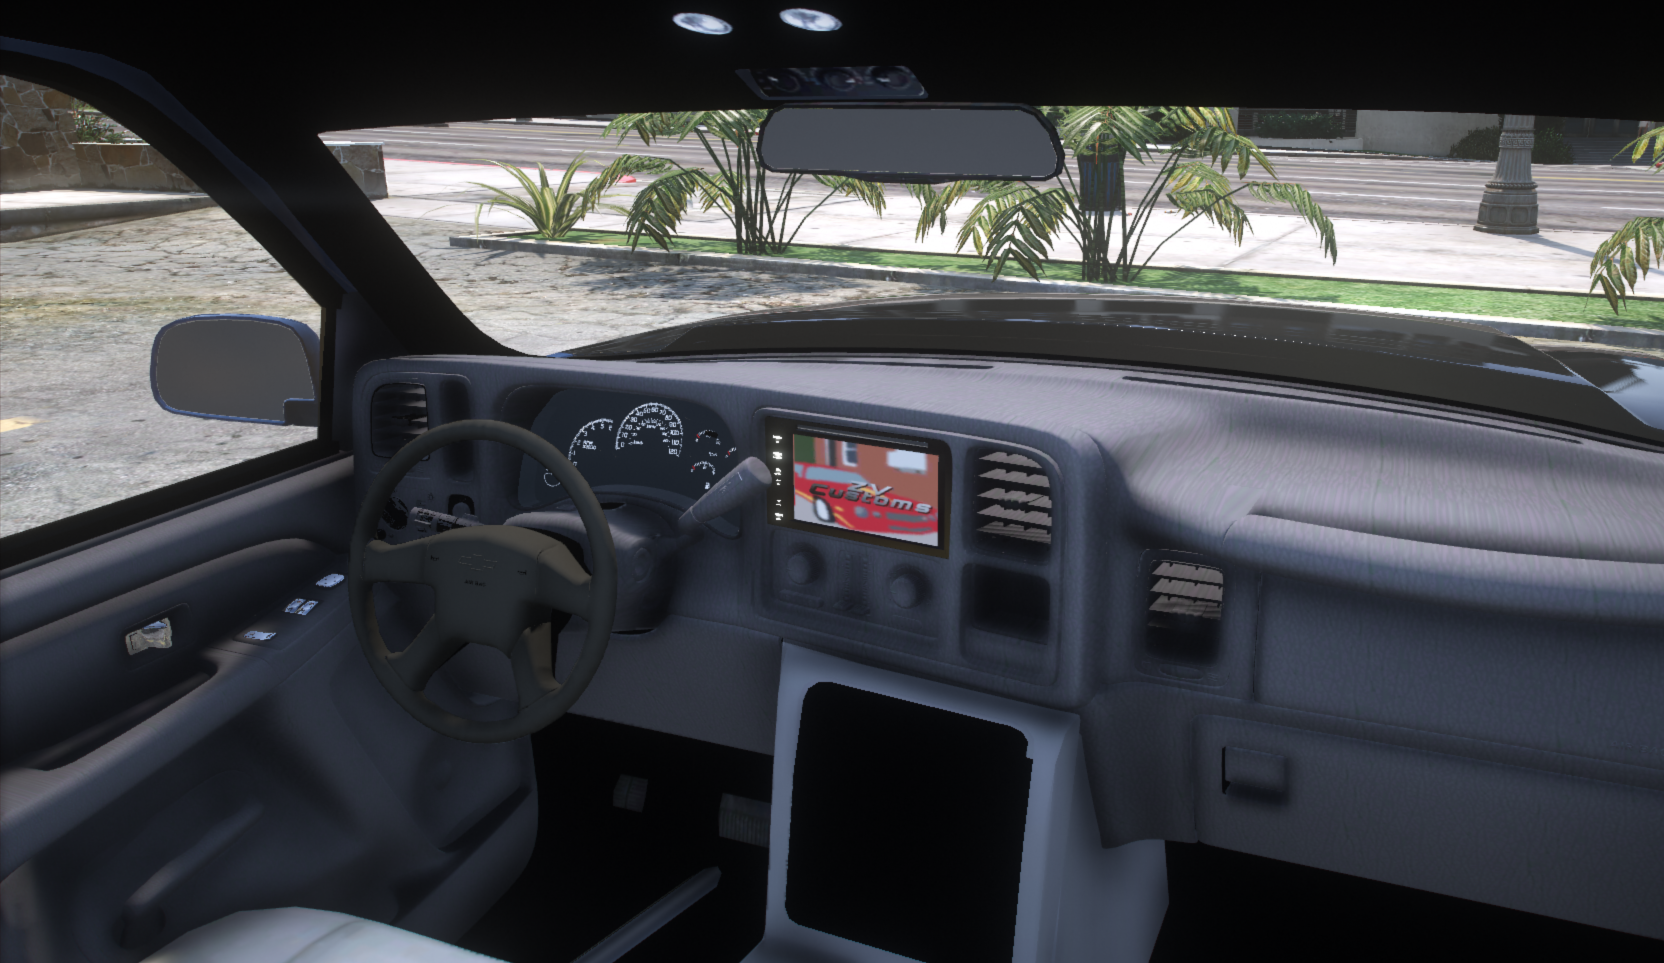 Download Drag Chevy Silverado Cat Eye Single Cab [FIVE-M] 1.0 for GTA 5